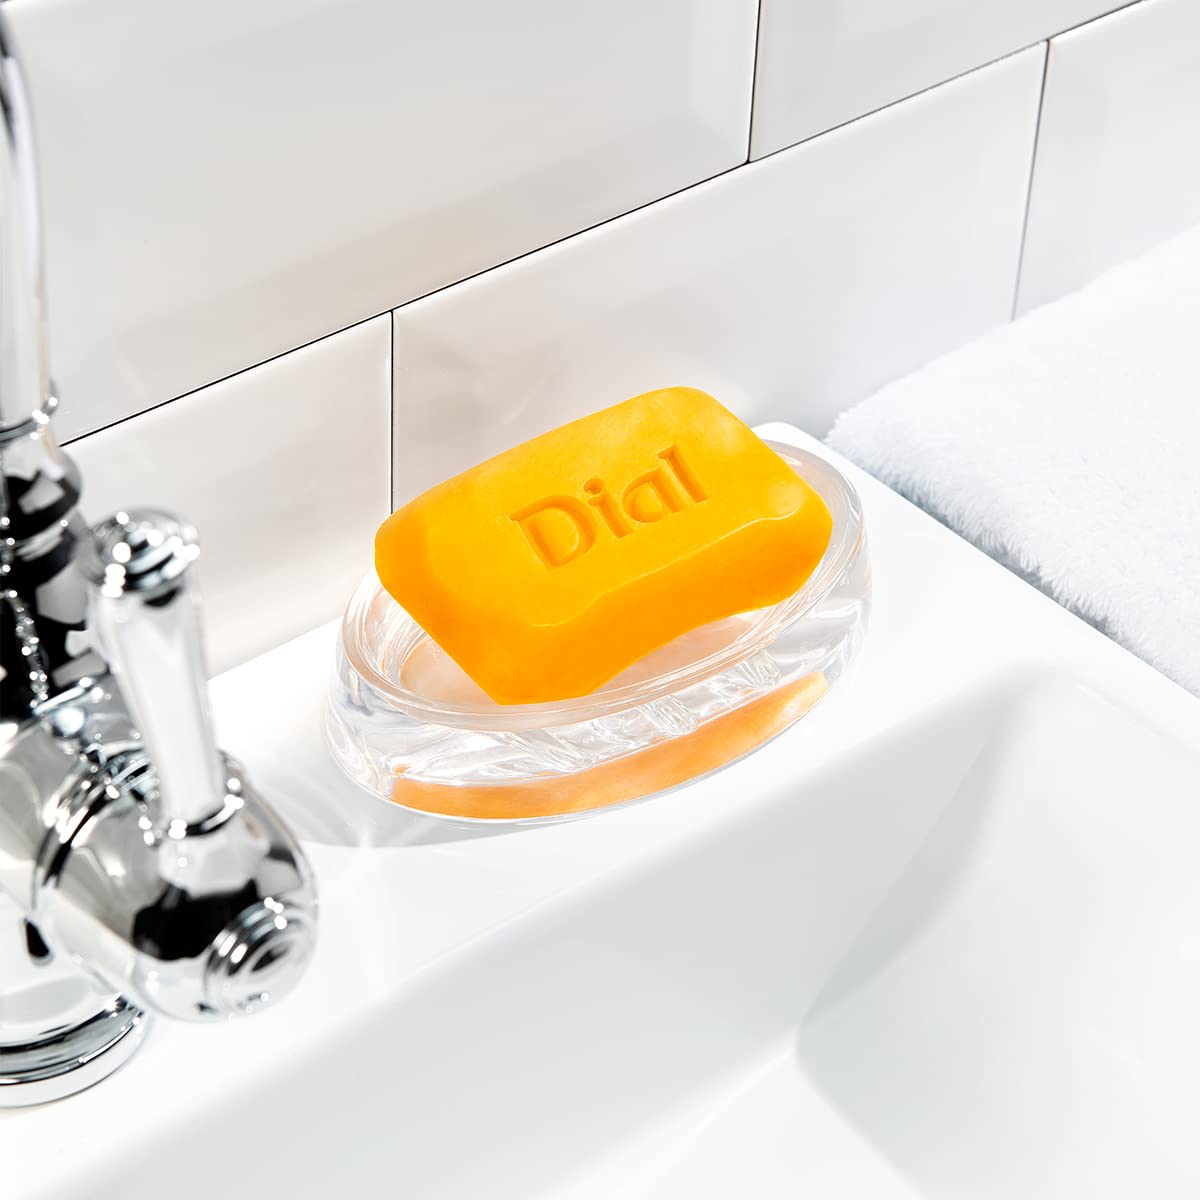 Dial Antibacterial Bar Soap, Gold, 4 Ounce - 8 Bars